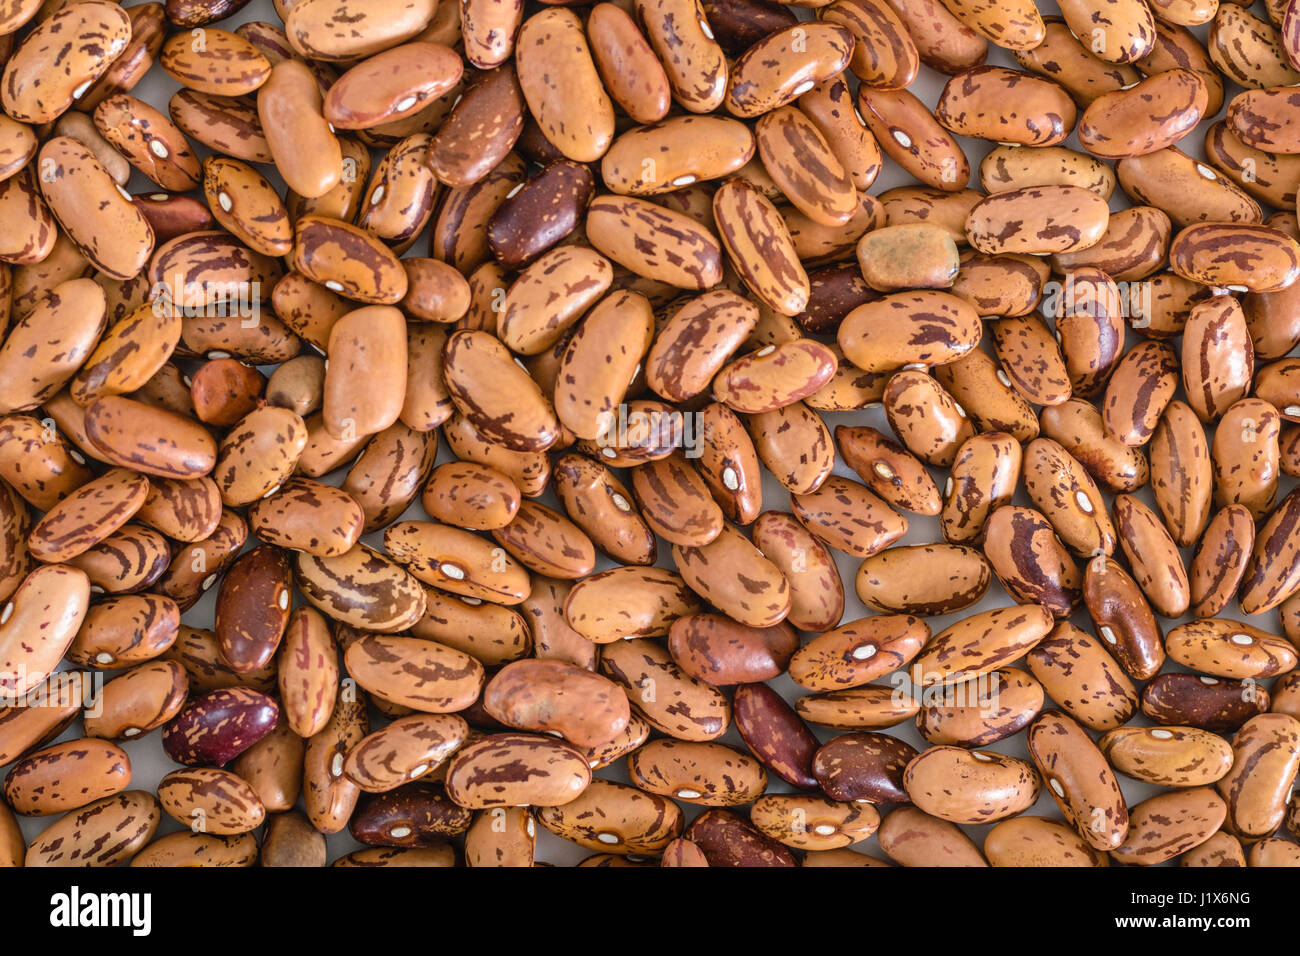 Red kidney beans (rajma) background Stock Photo